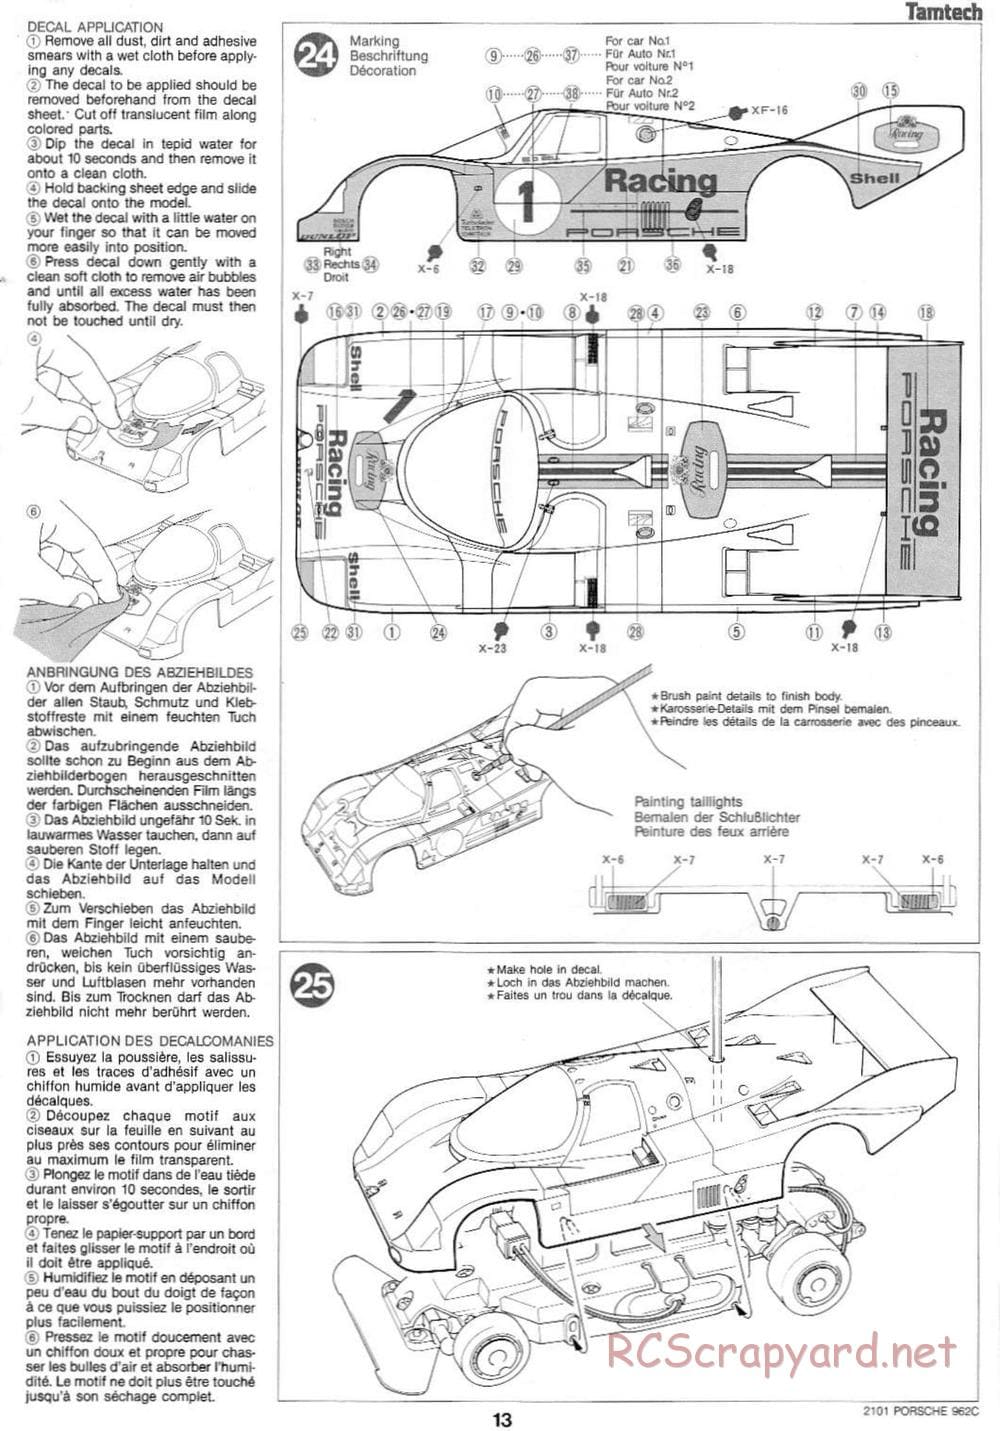 Tamiya - Tamtech - Porsche 962C Chassis - Manual - Page 13